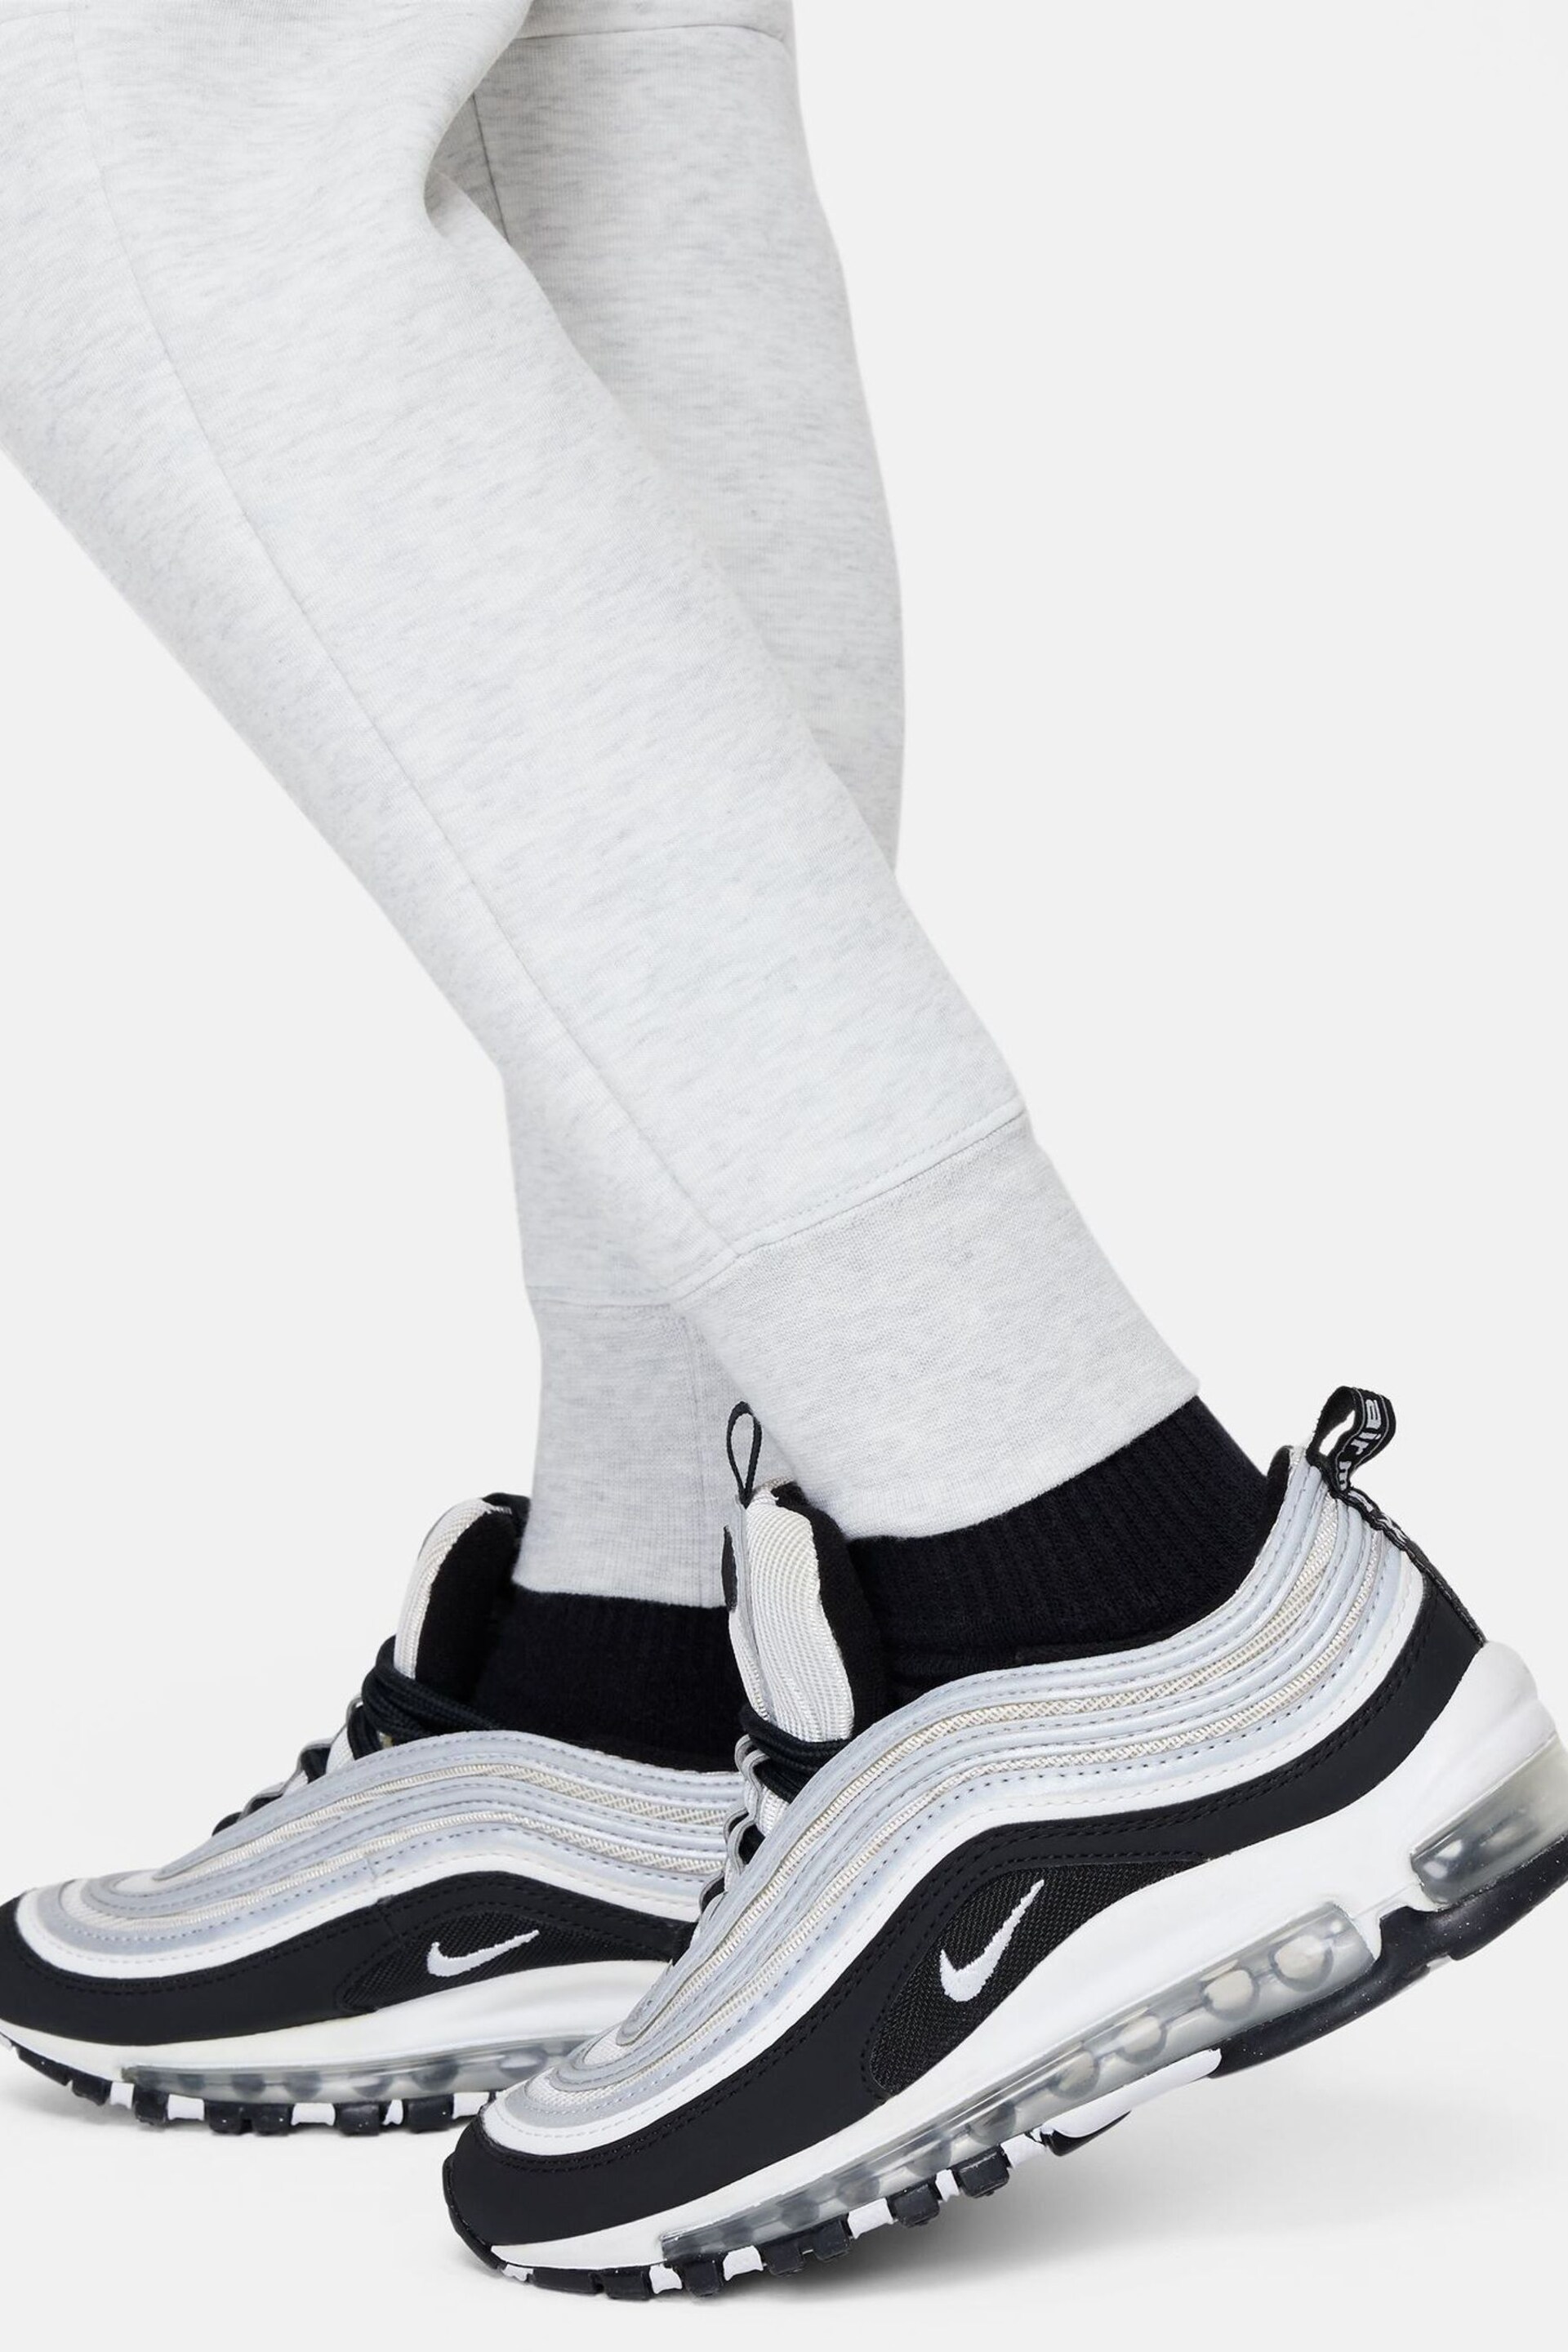 Nike Dark Grey Tech Fleece Joggers - Image 6 of 7